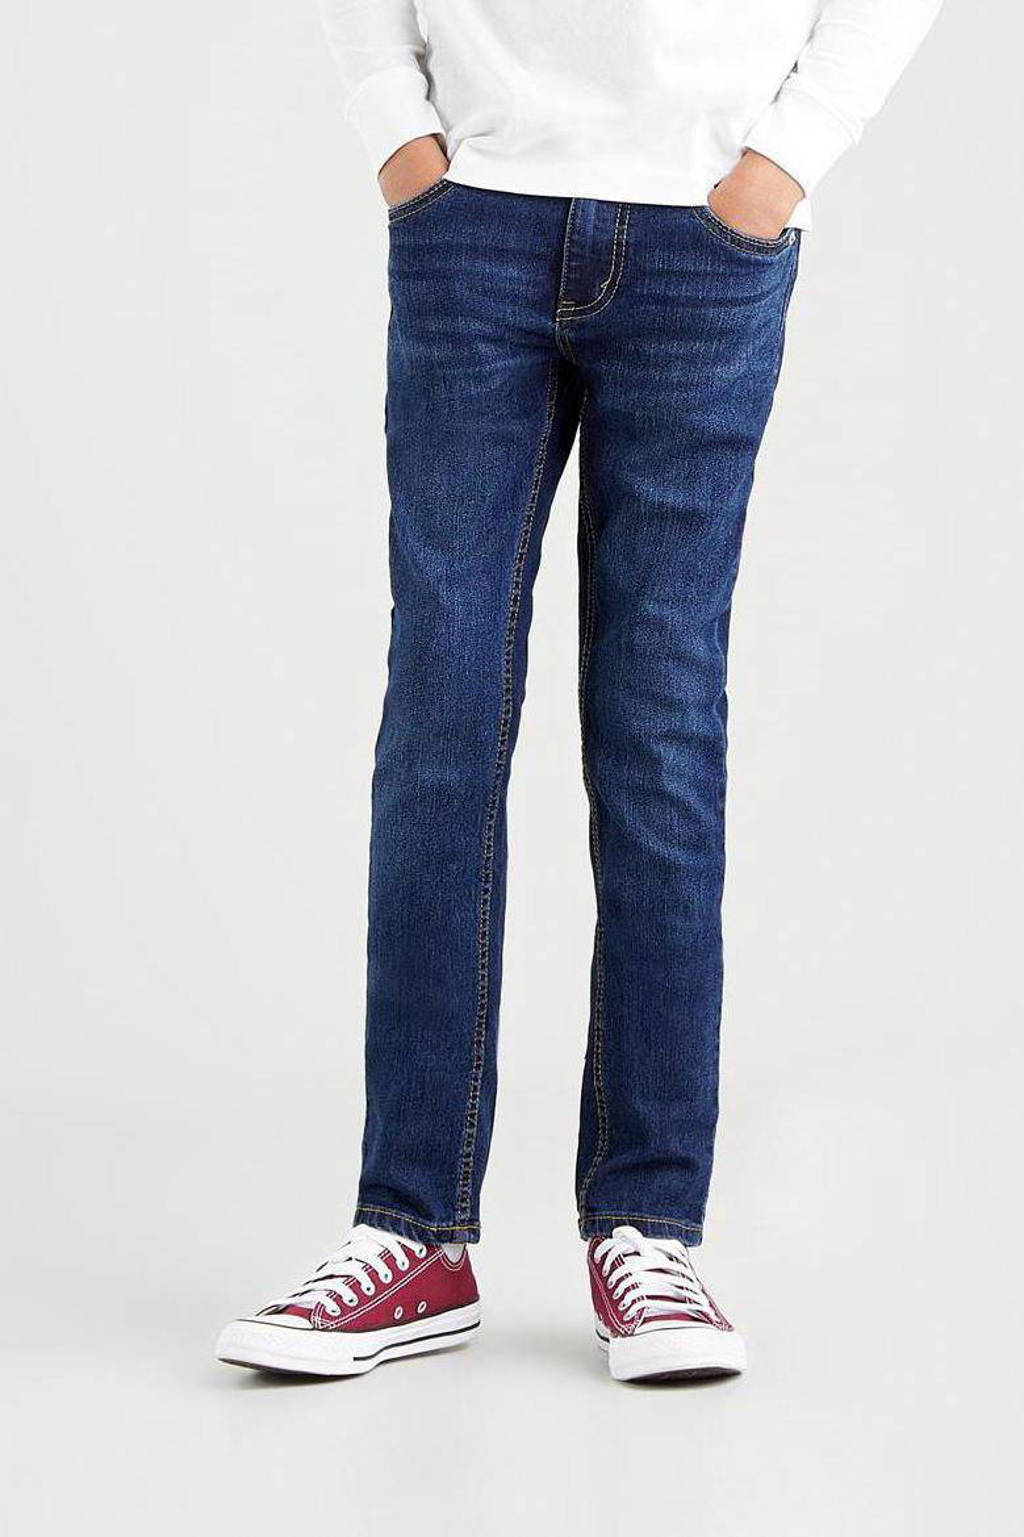 510 Classic skinny jeans machu picchud5w